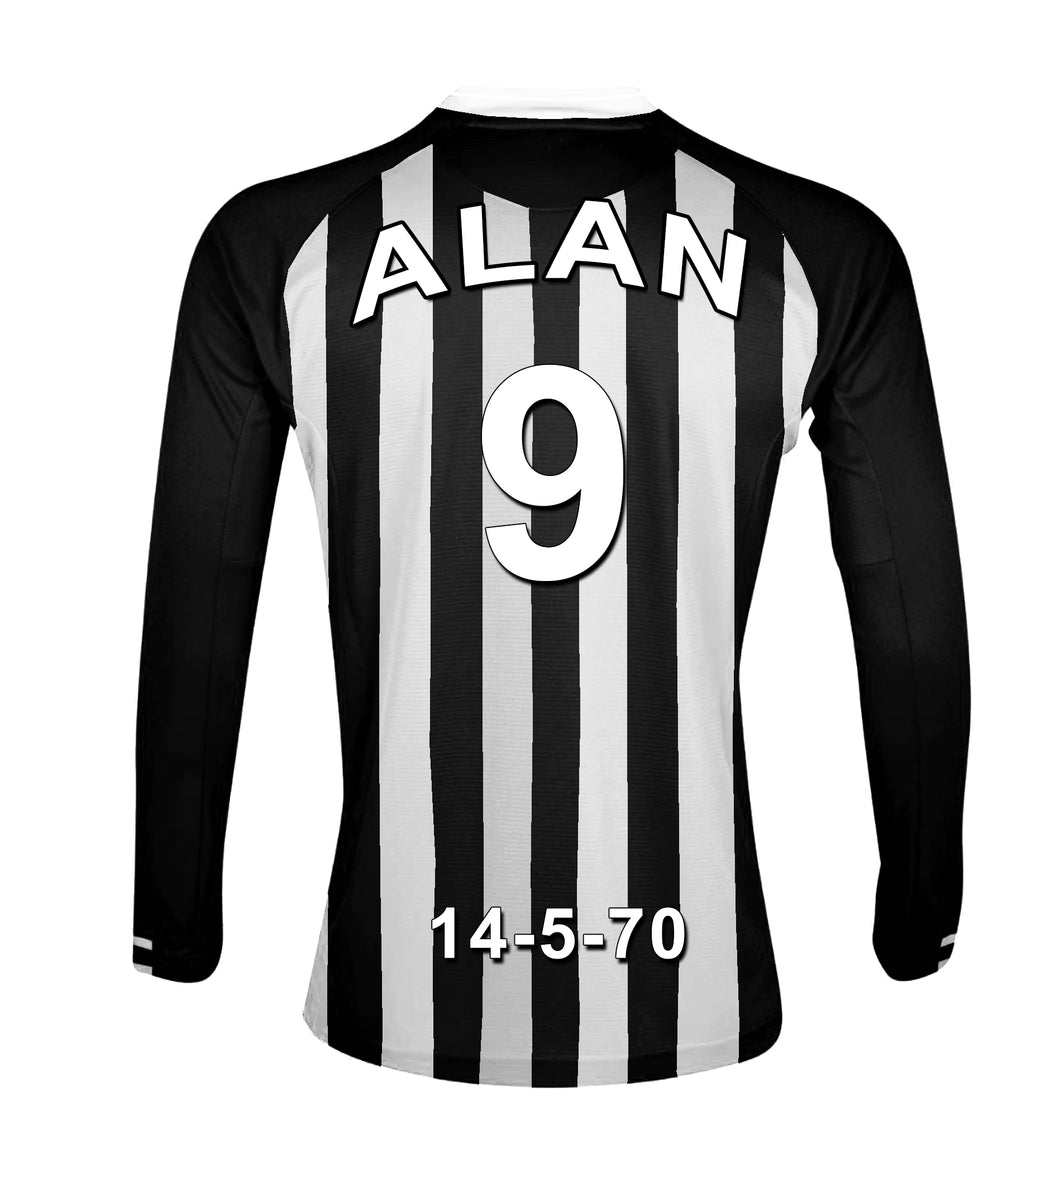 Newcastle Football Club black and white personalised football shirt canvas